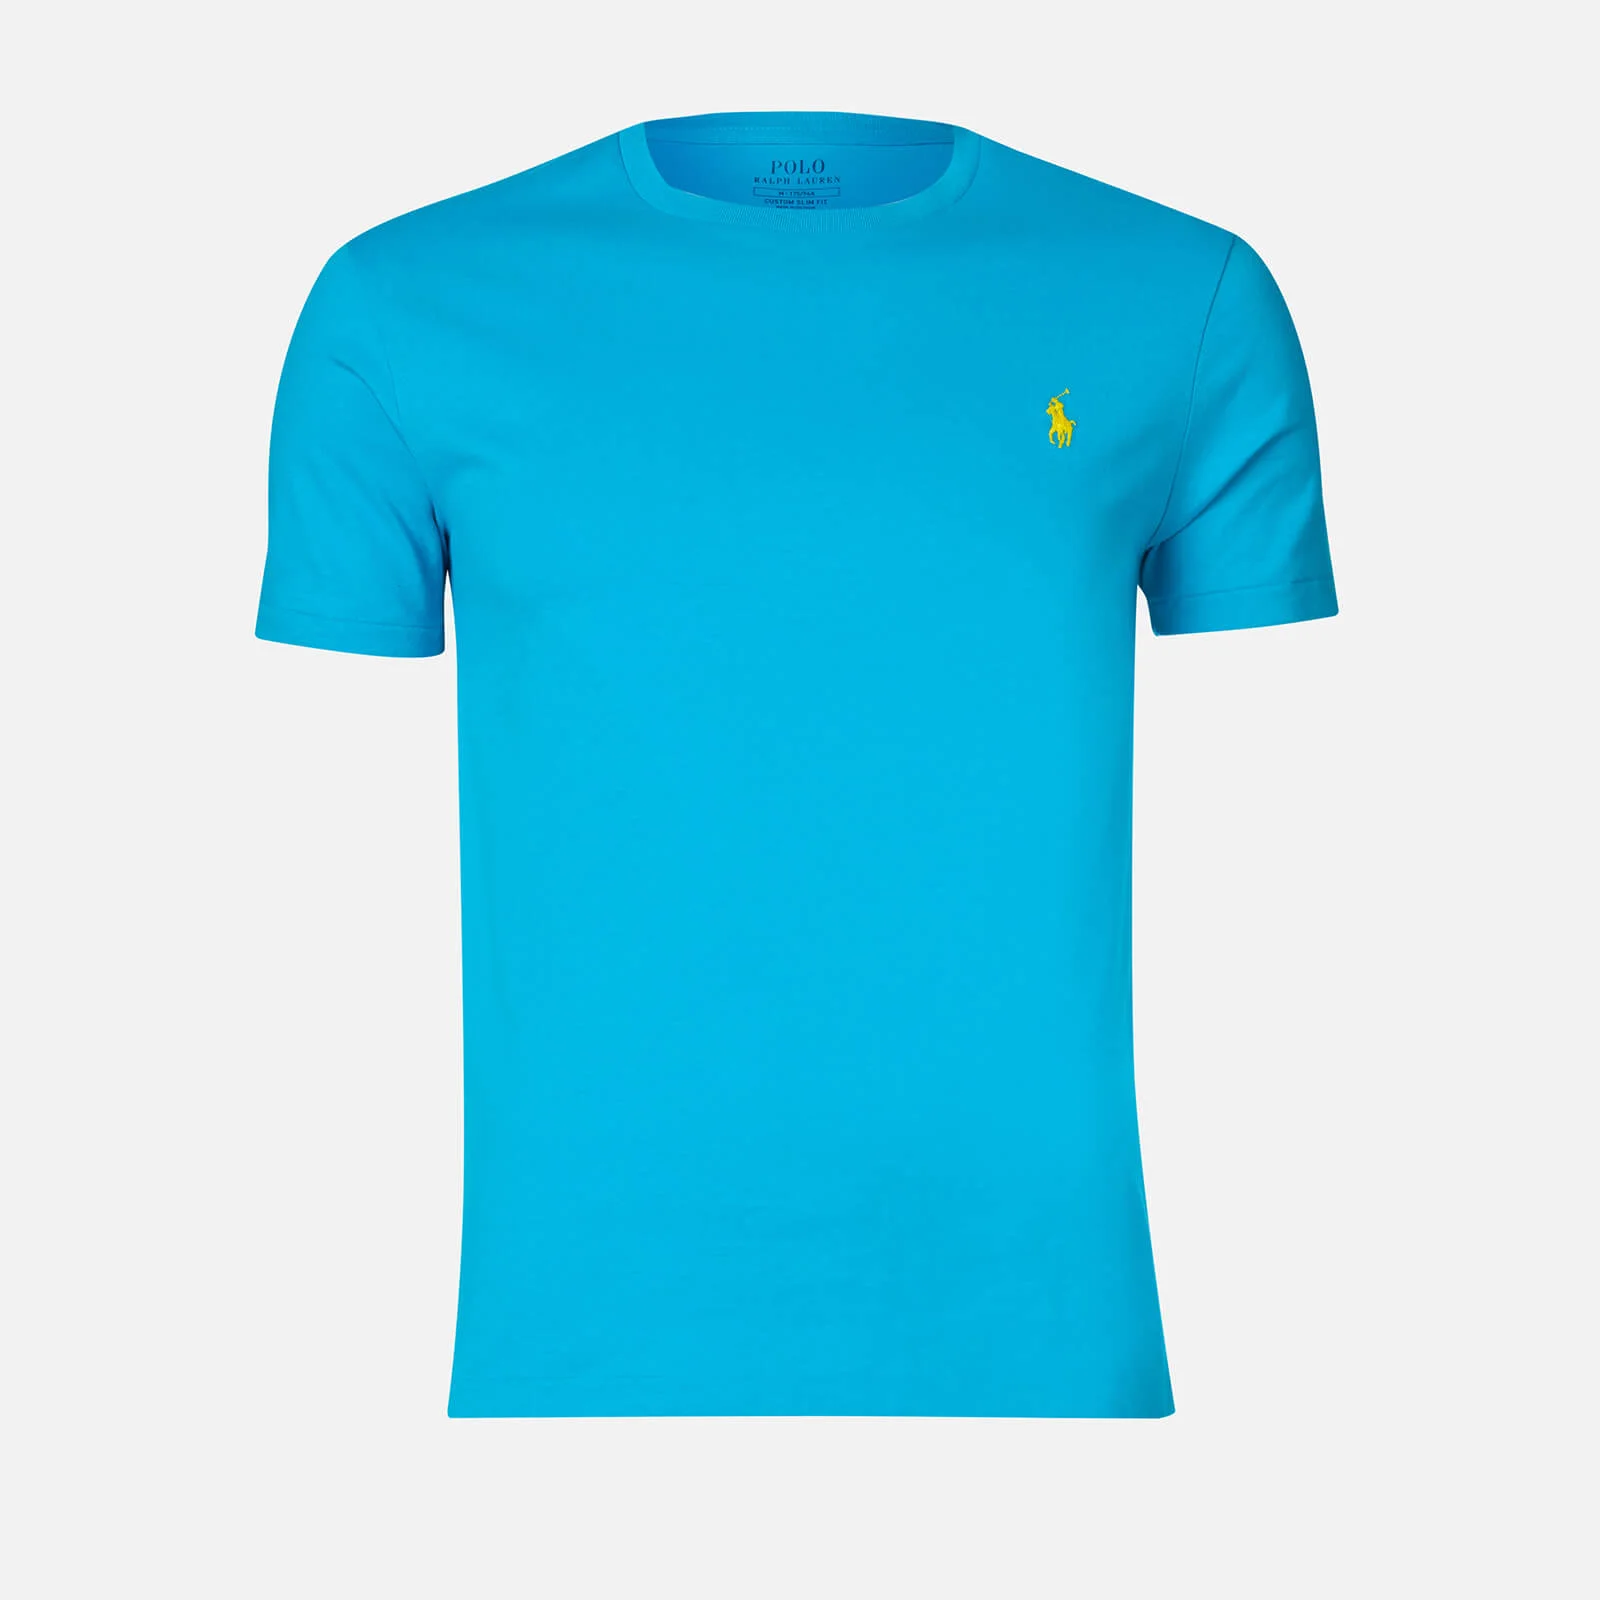 Polo Ralph Lauren Men's Short Sleeve T-Shirt - Cove Blue Image 1